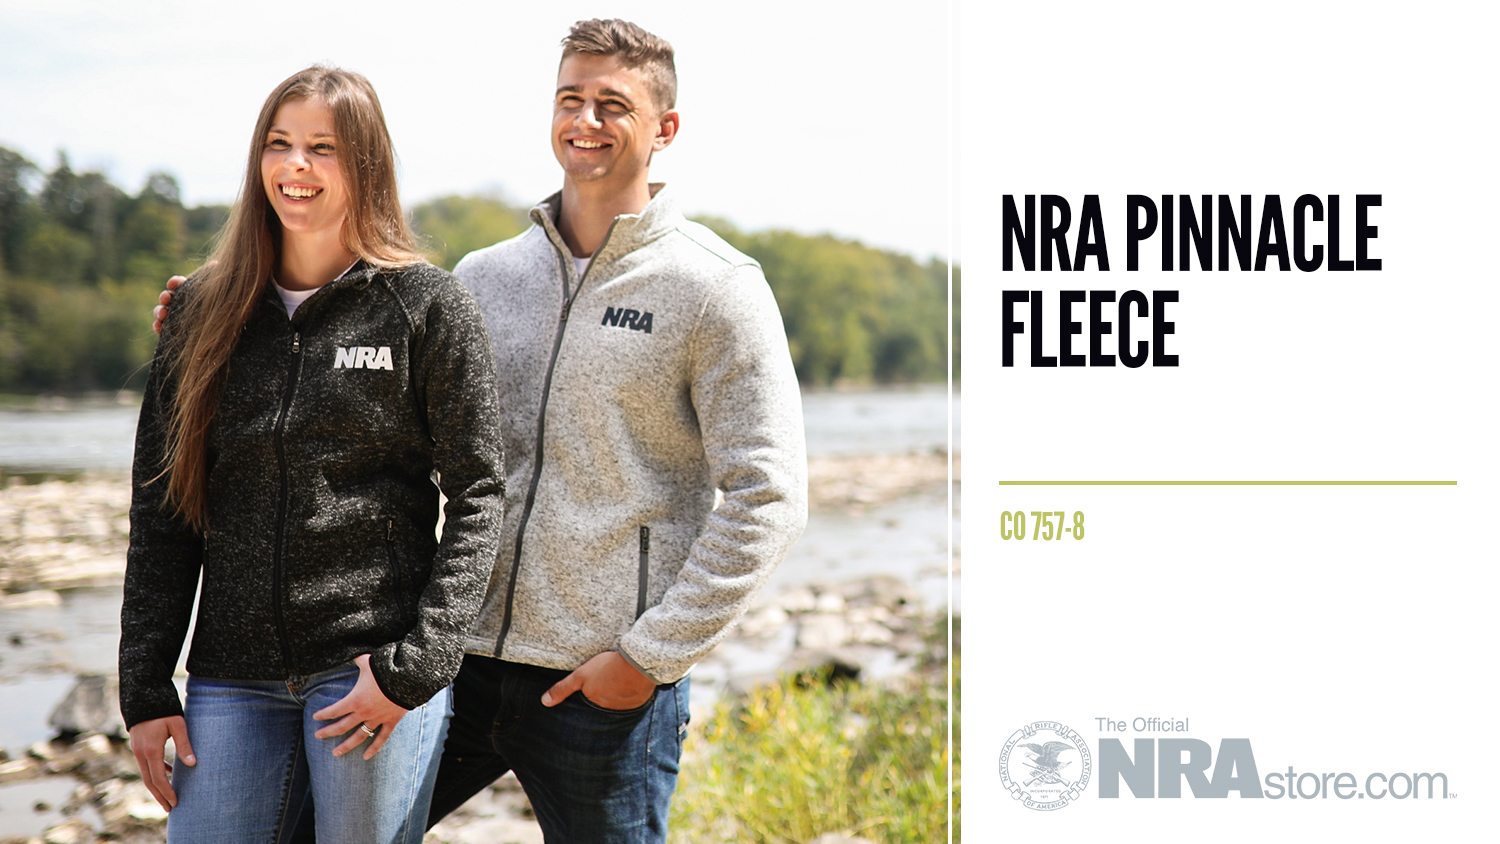 NRAstore Product Highlight: Pinnacle Fleece